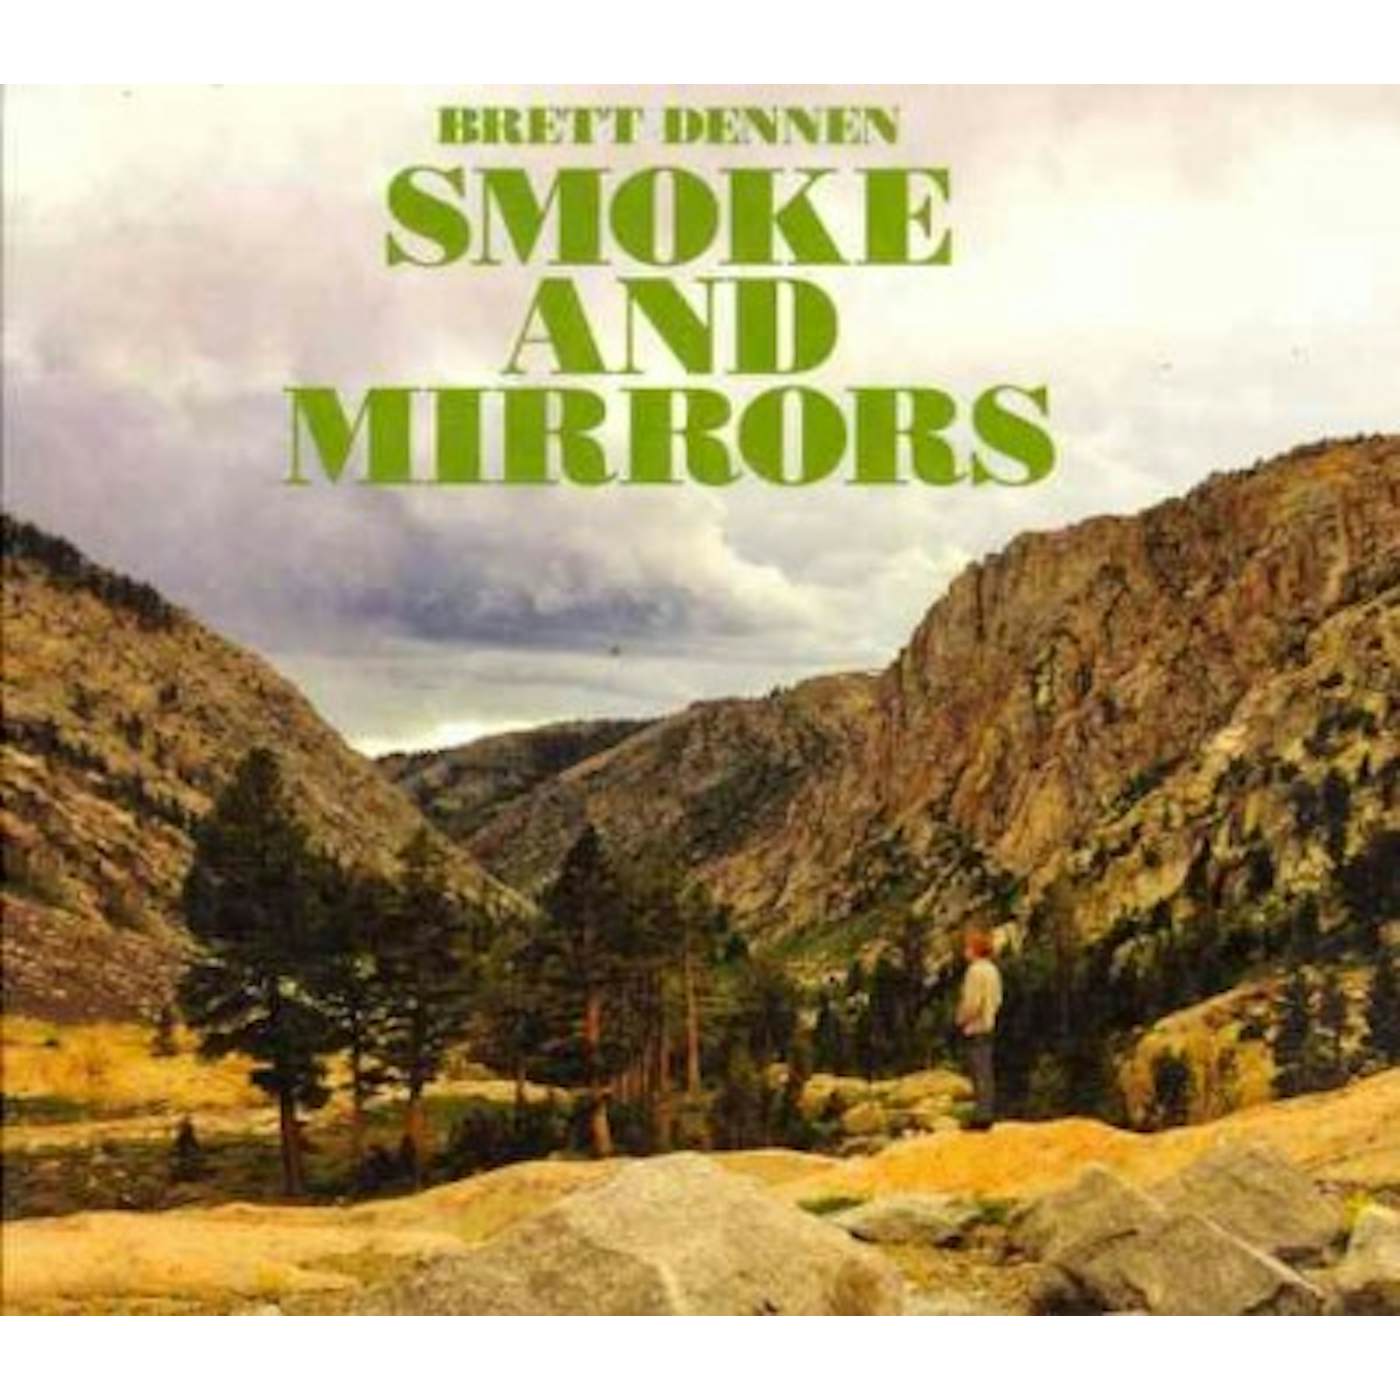 Brett Dennen Smoke and Mirrors CD